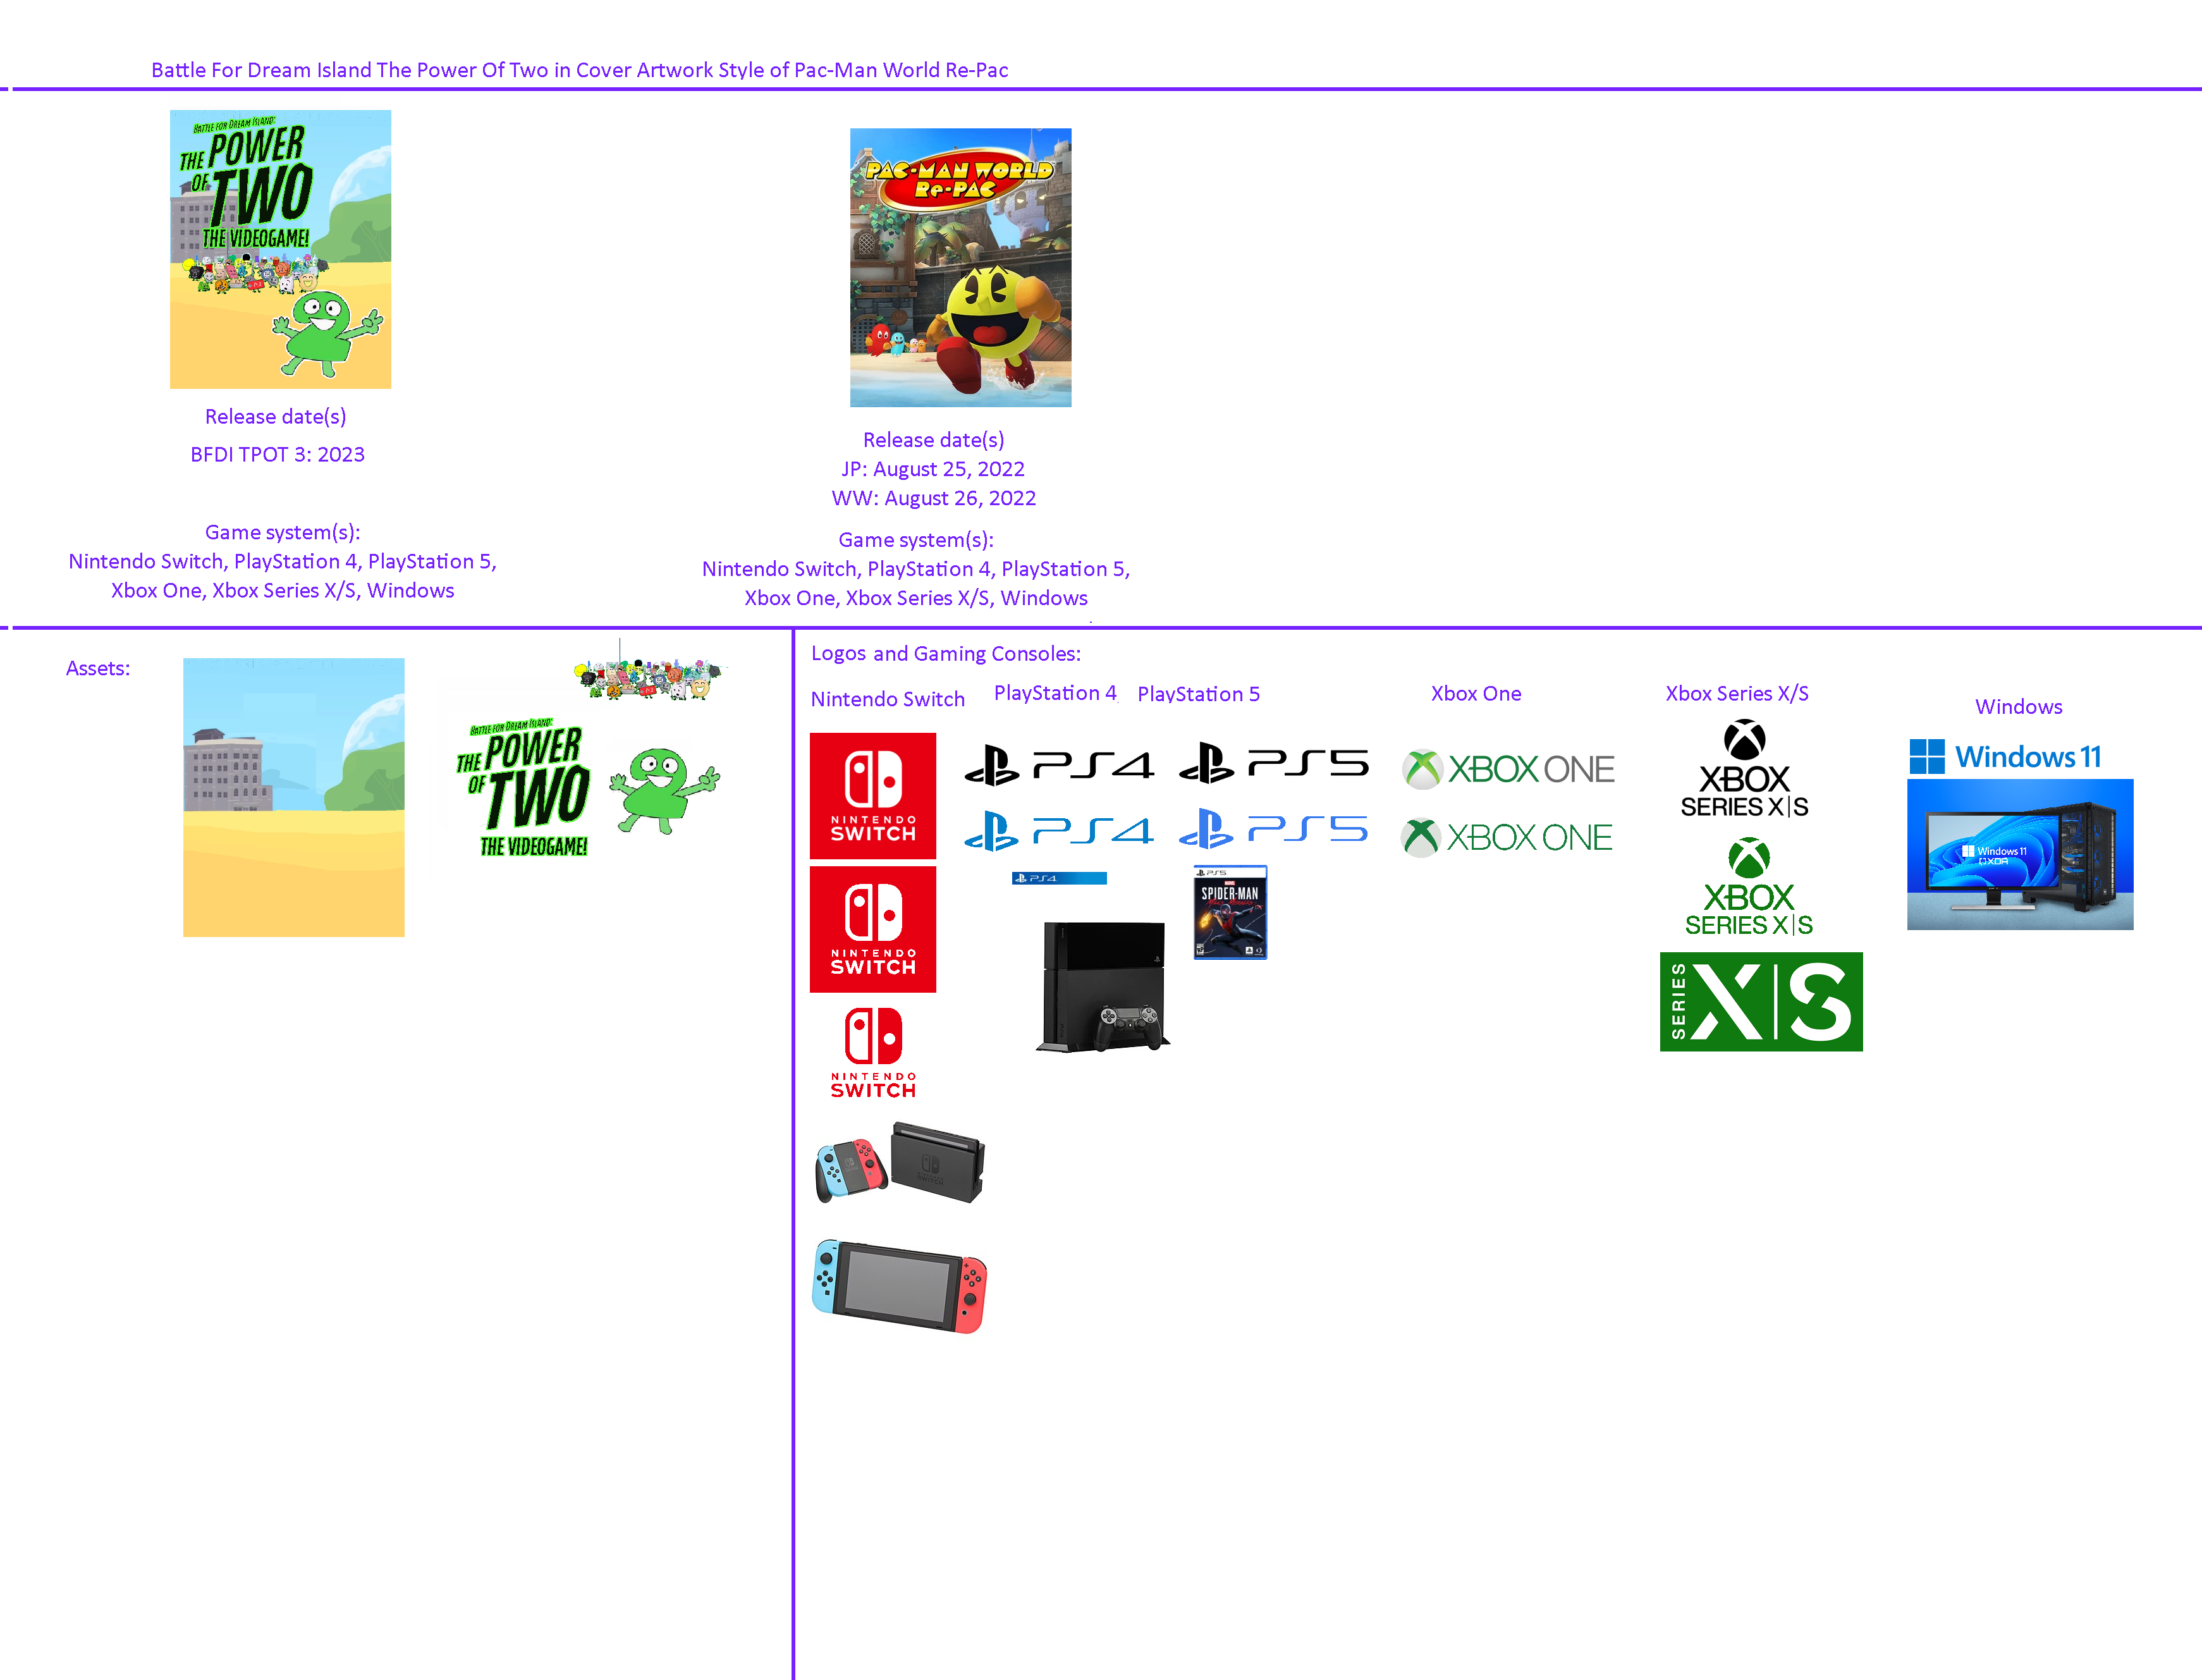 Battle For Dream Island x Super Mario Maker 2 Crossover fanart I made about  a year ago : r/BattleForDreamIsland